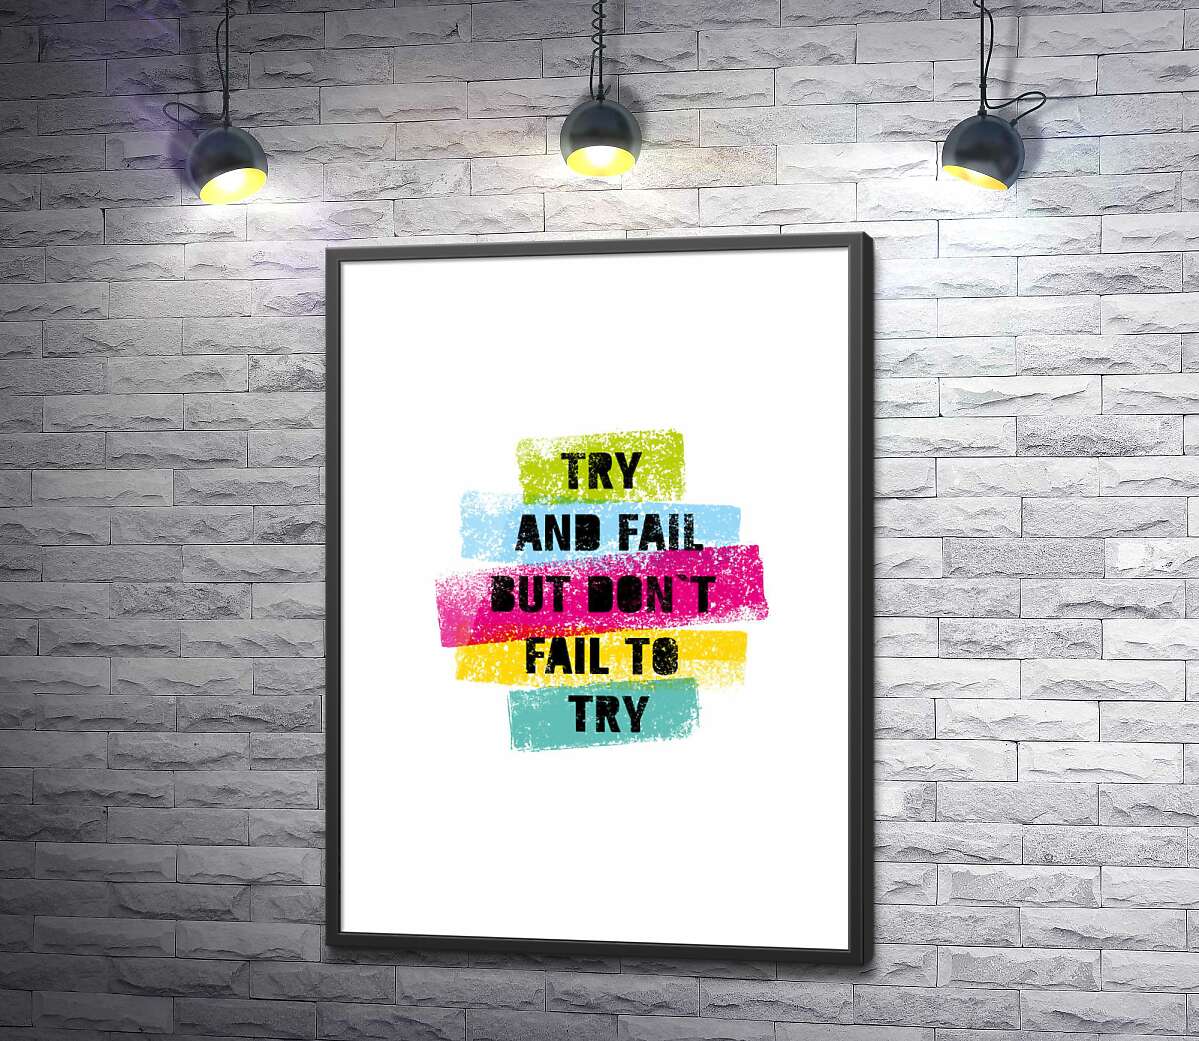 постер Мотиваційна фраза "Try and fail but never fail to try" у пастельних тонах